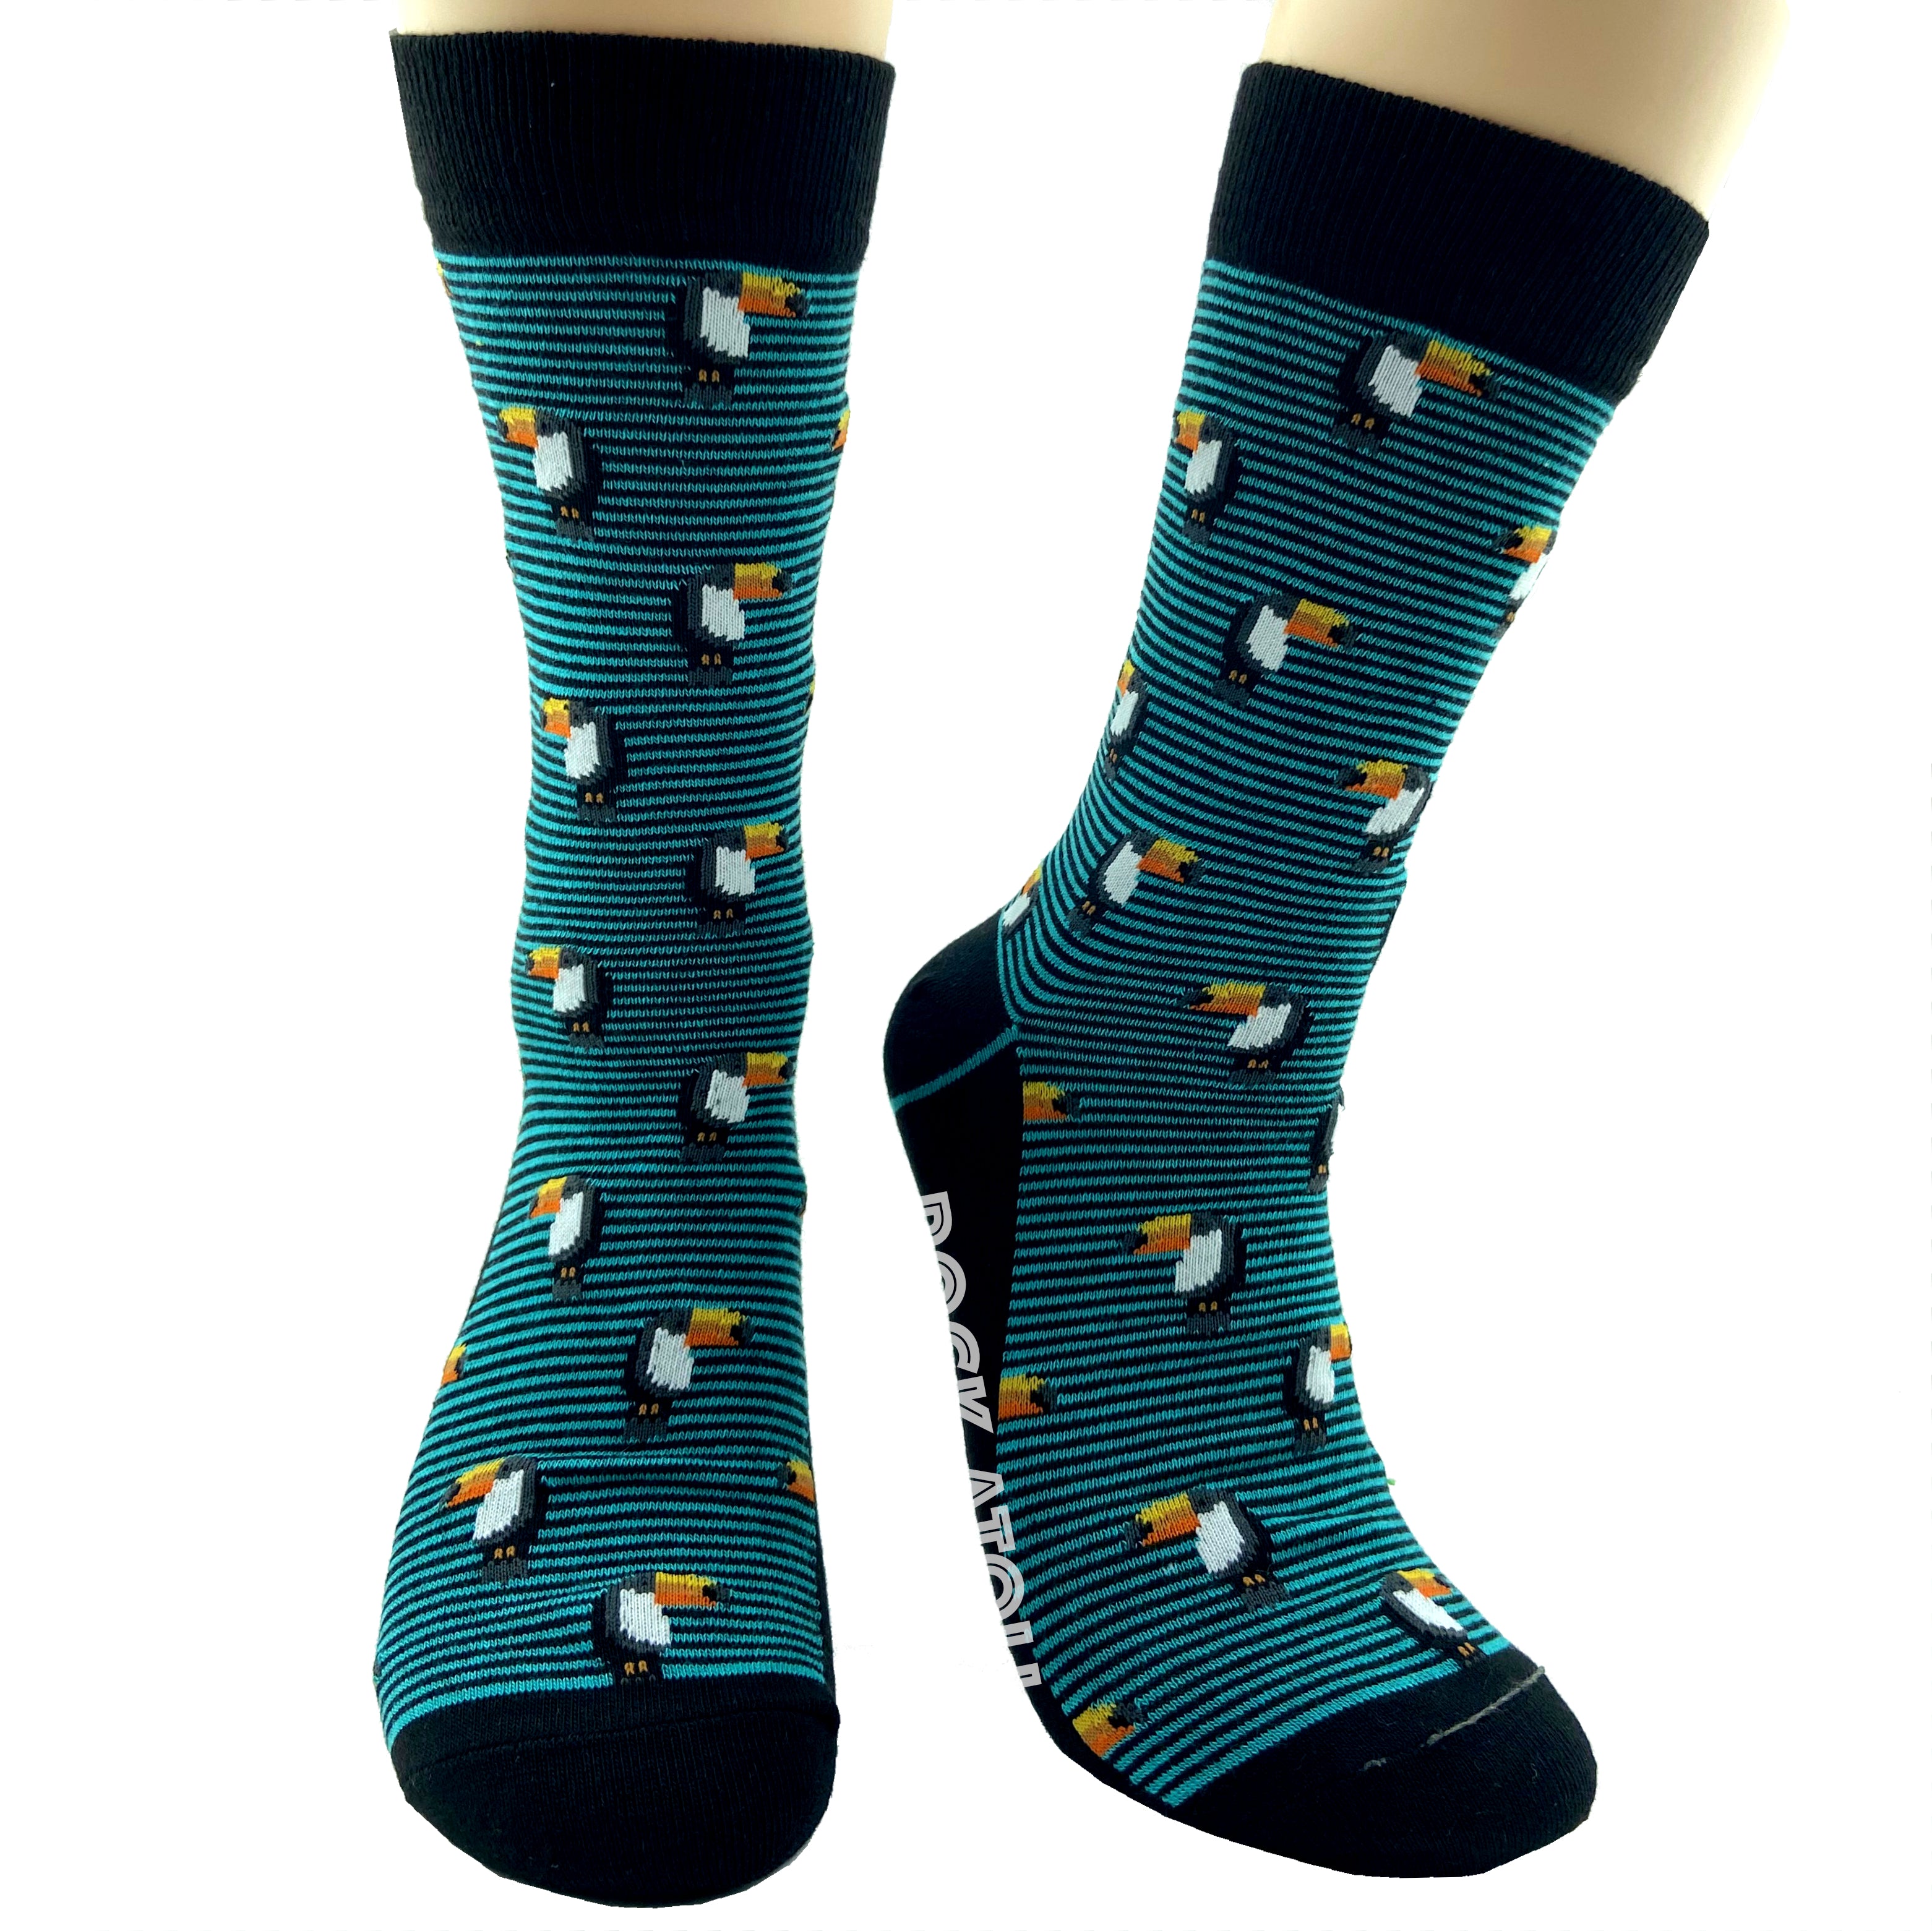 Classy Unisex Tropical Bird Toucan All Over Print Striped Novelty Socks